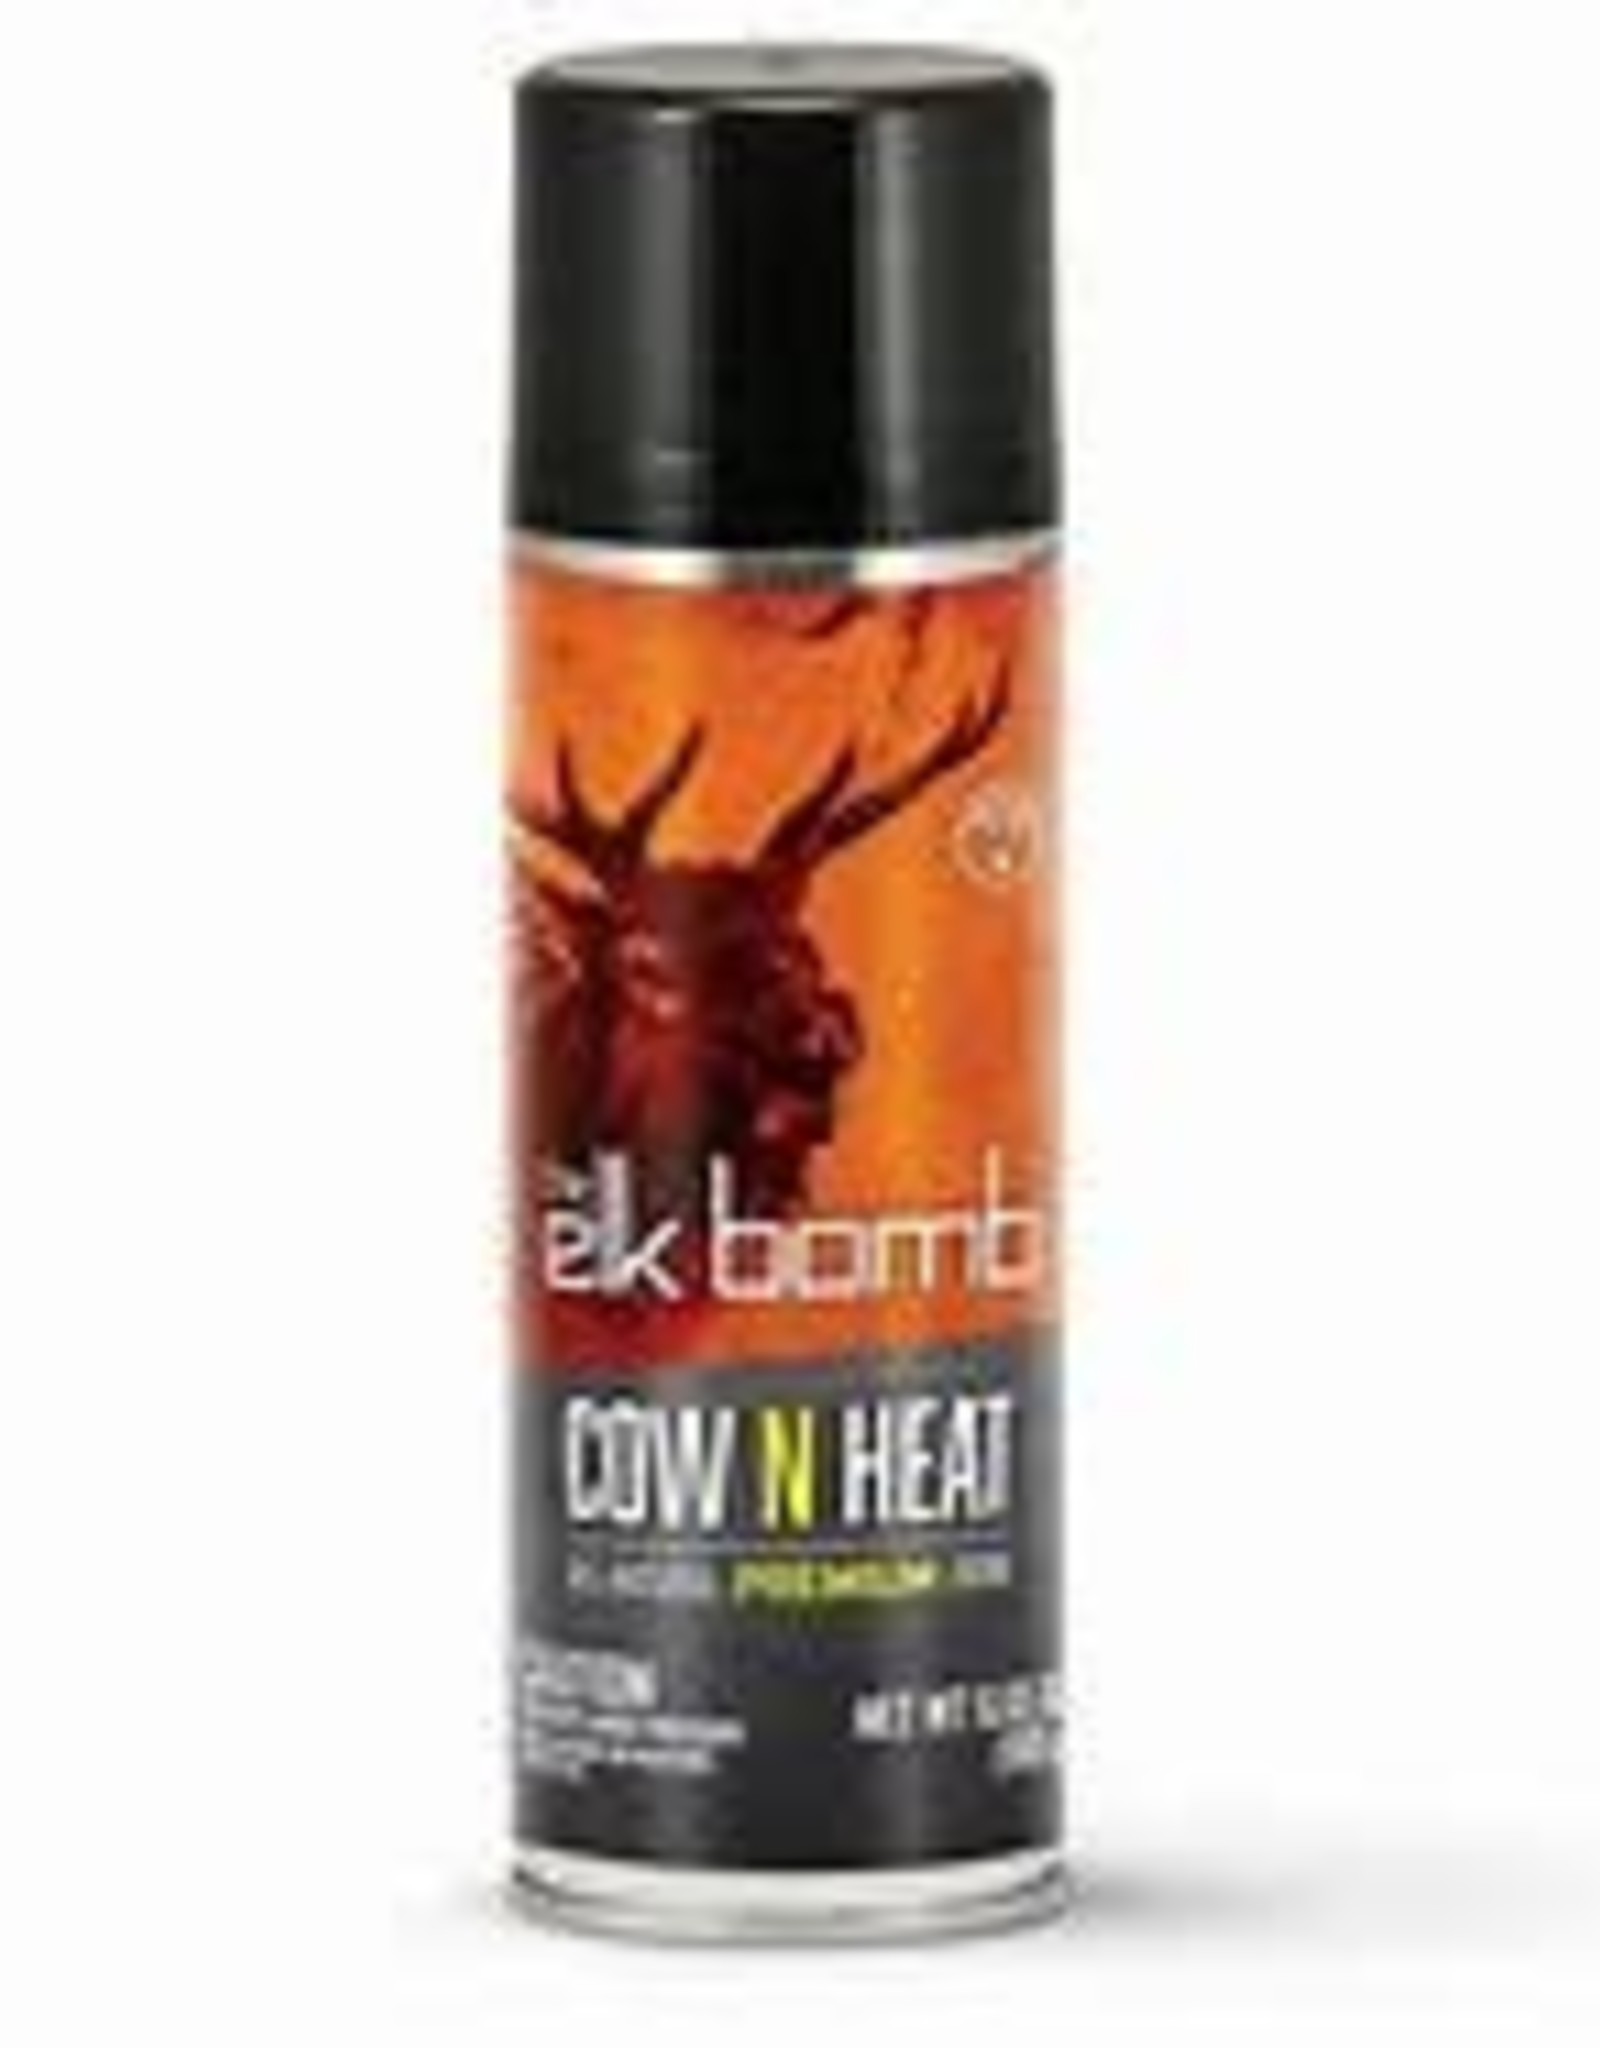 The Buck Bomb Cow N Heat